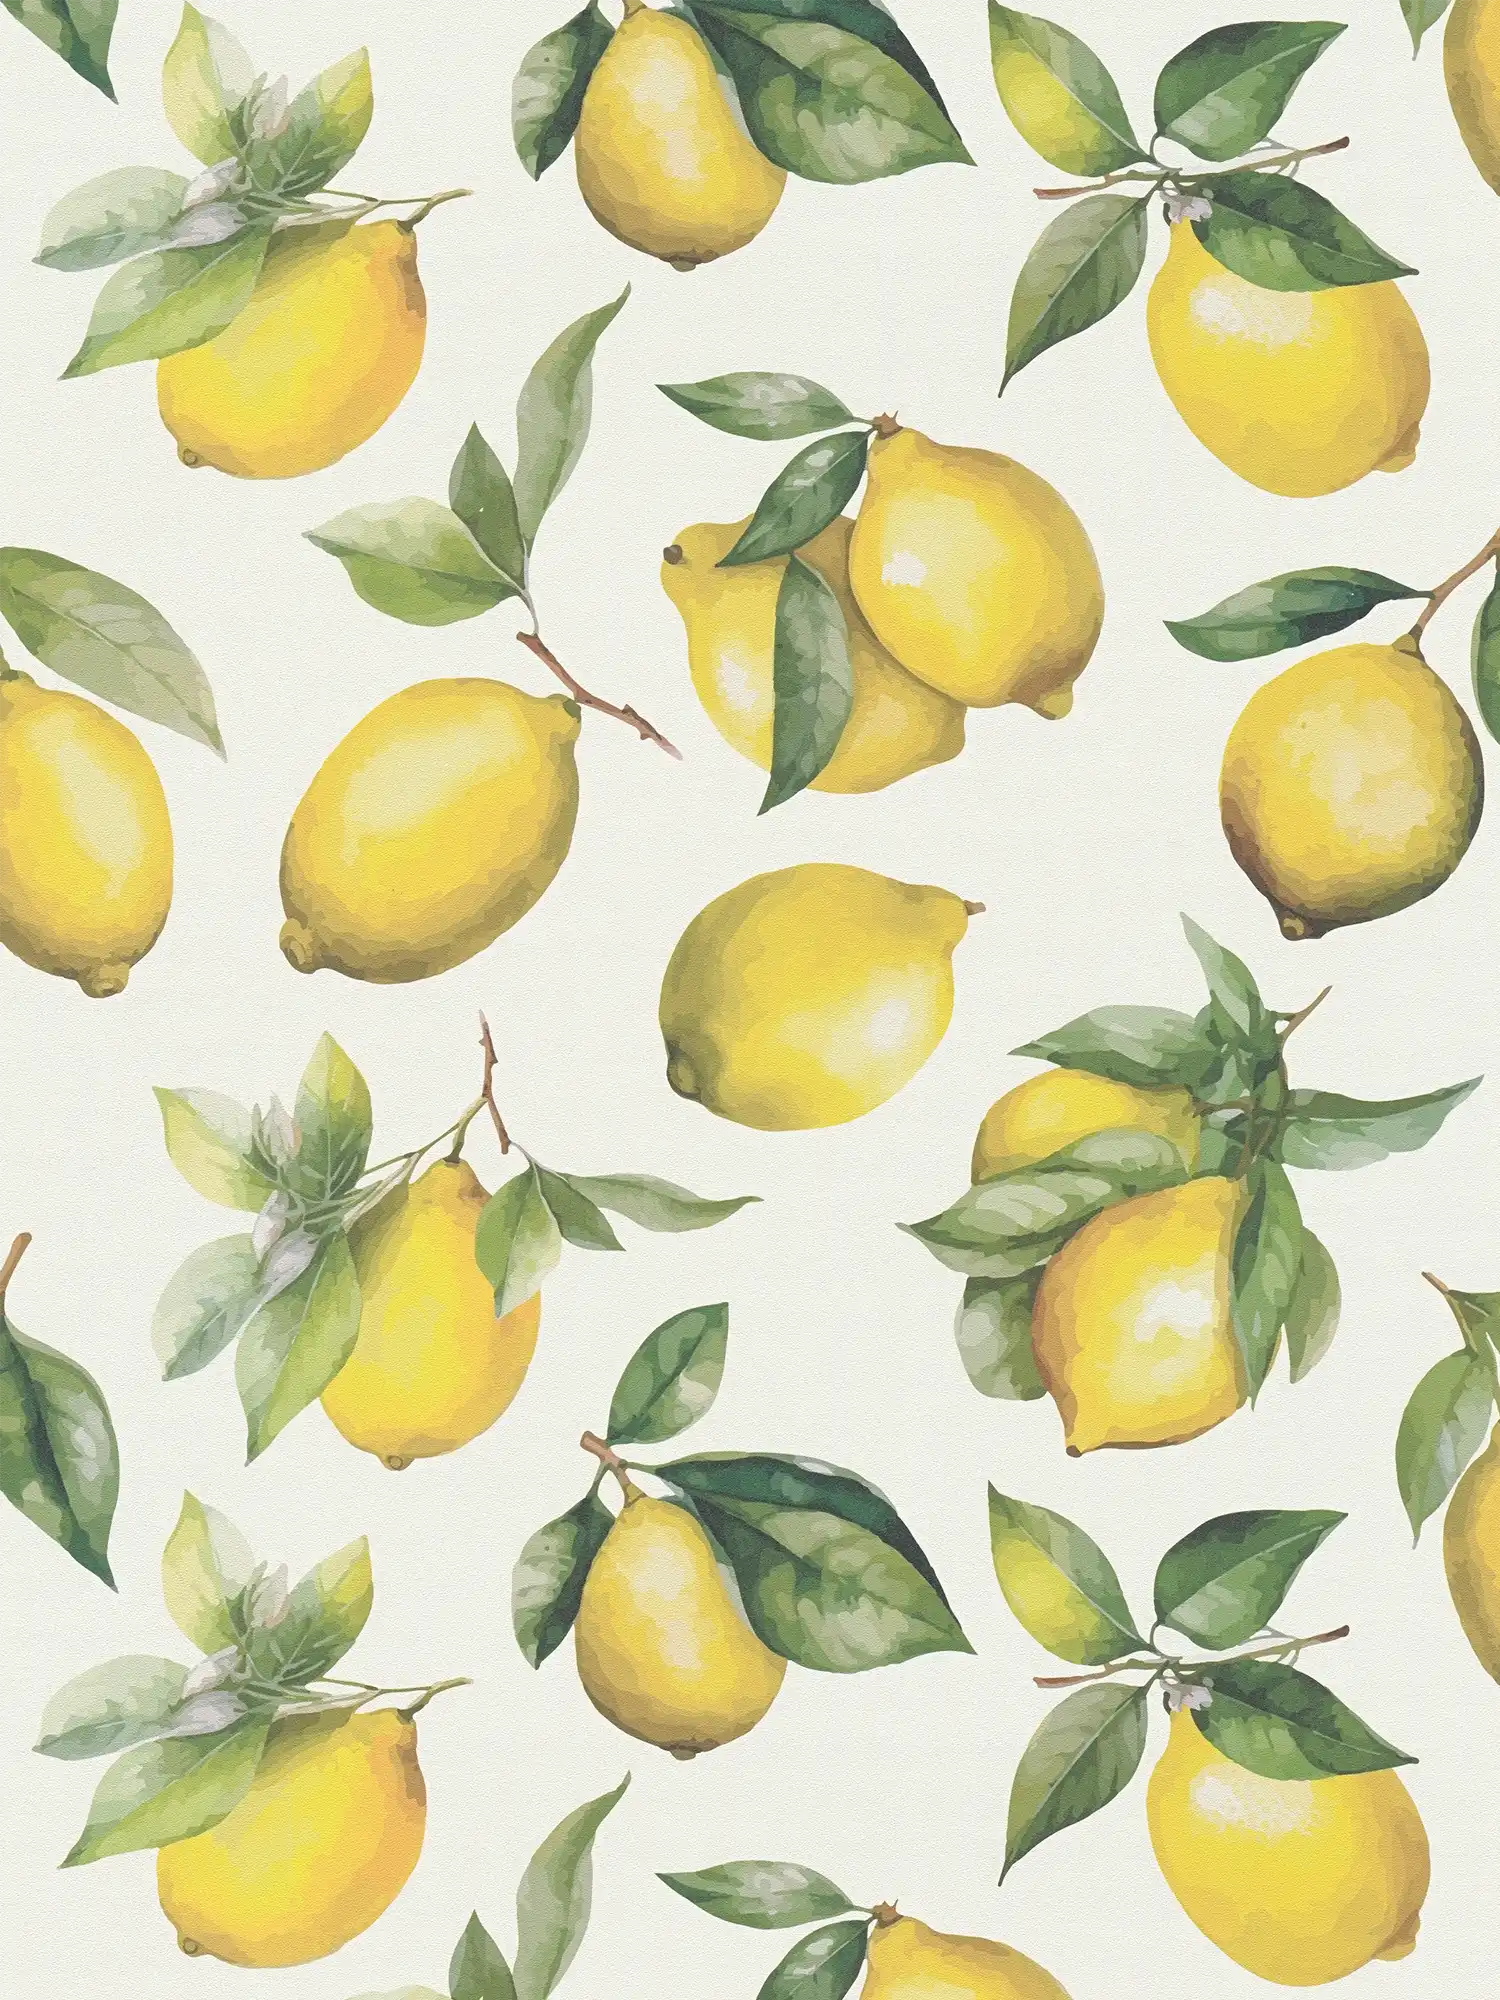         Non-woven wallpaper with painted lemon motif - white, yellow, green
    